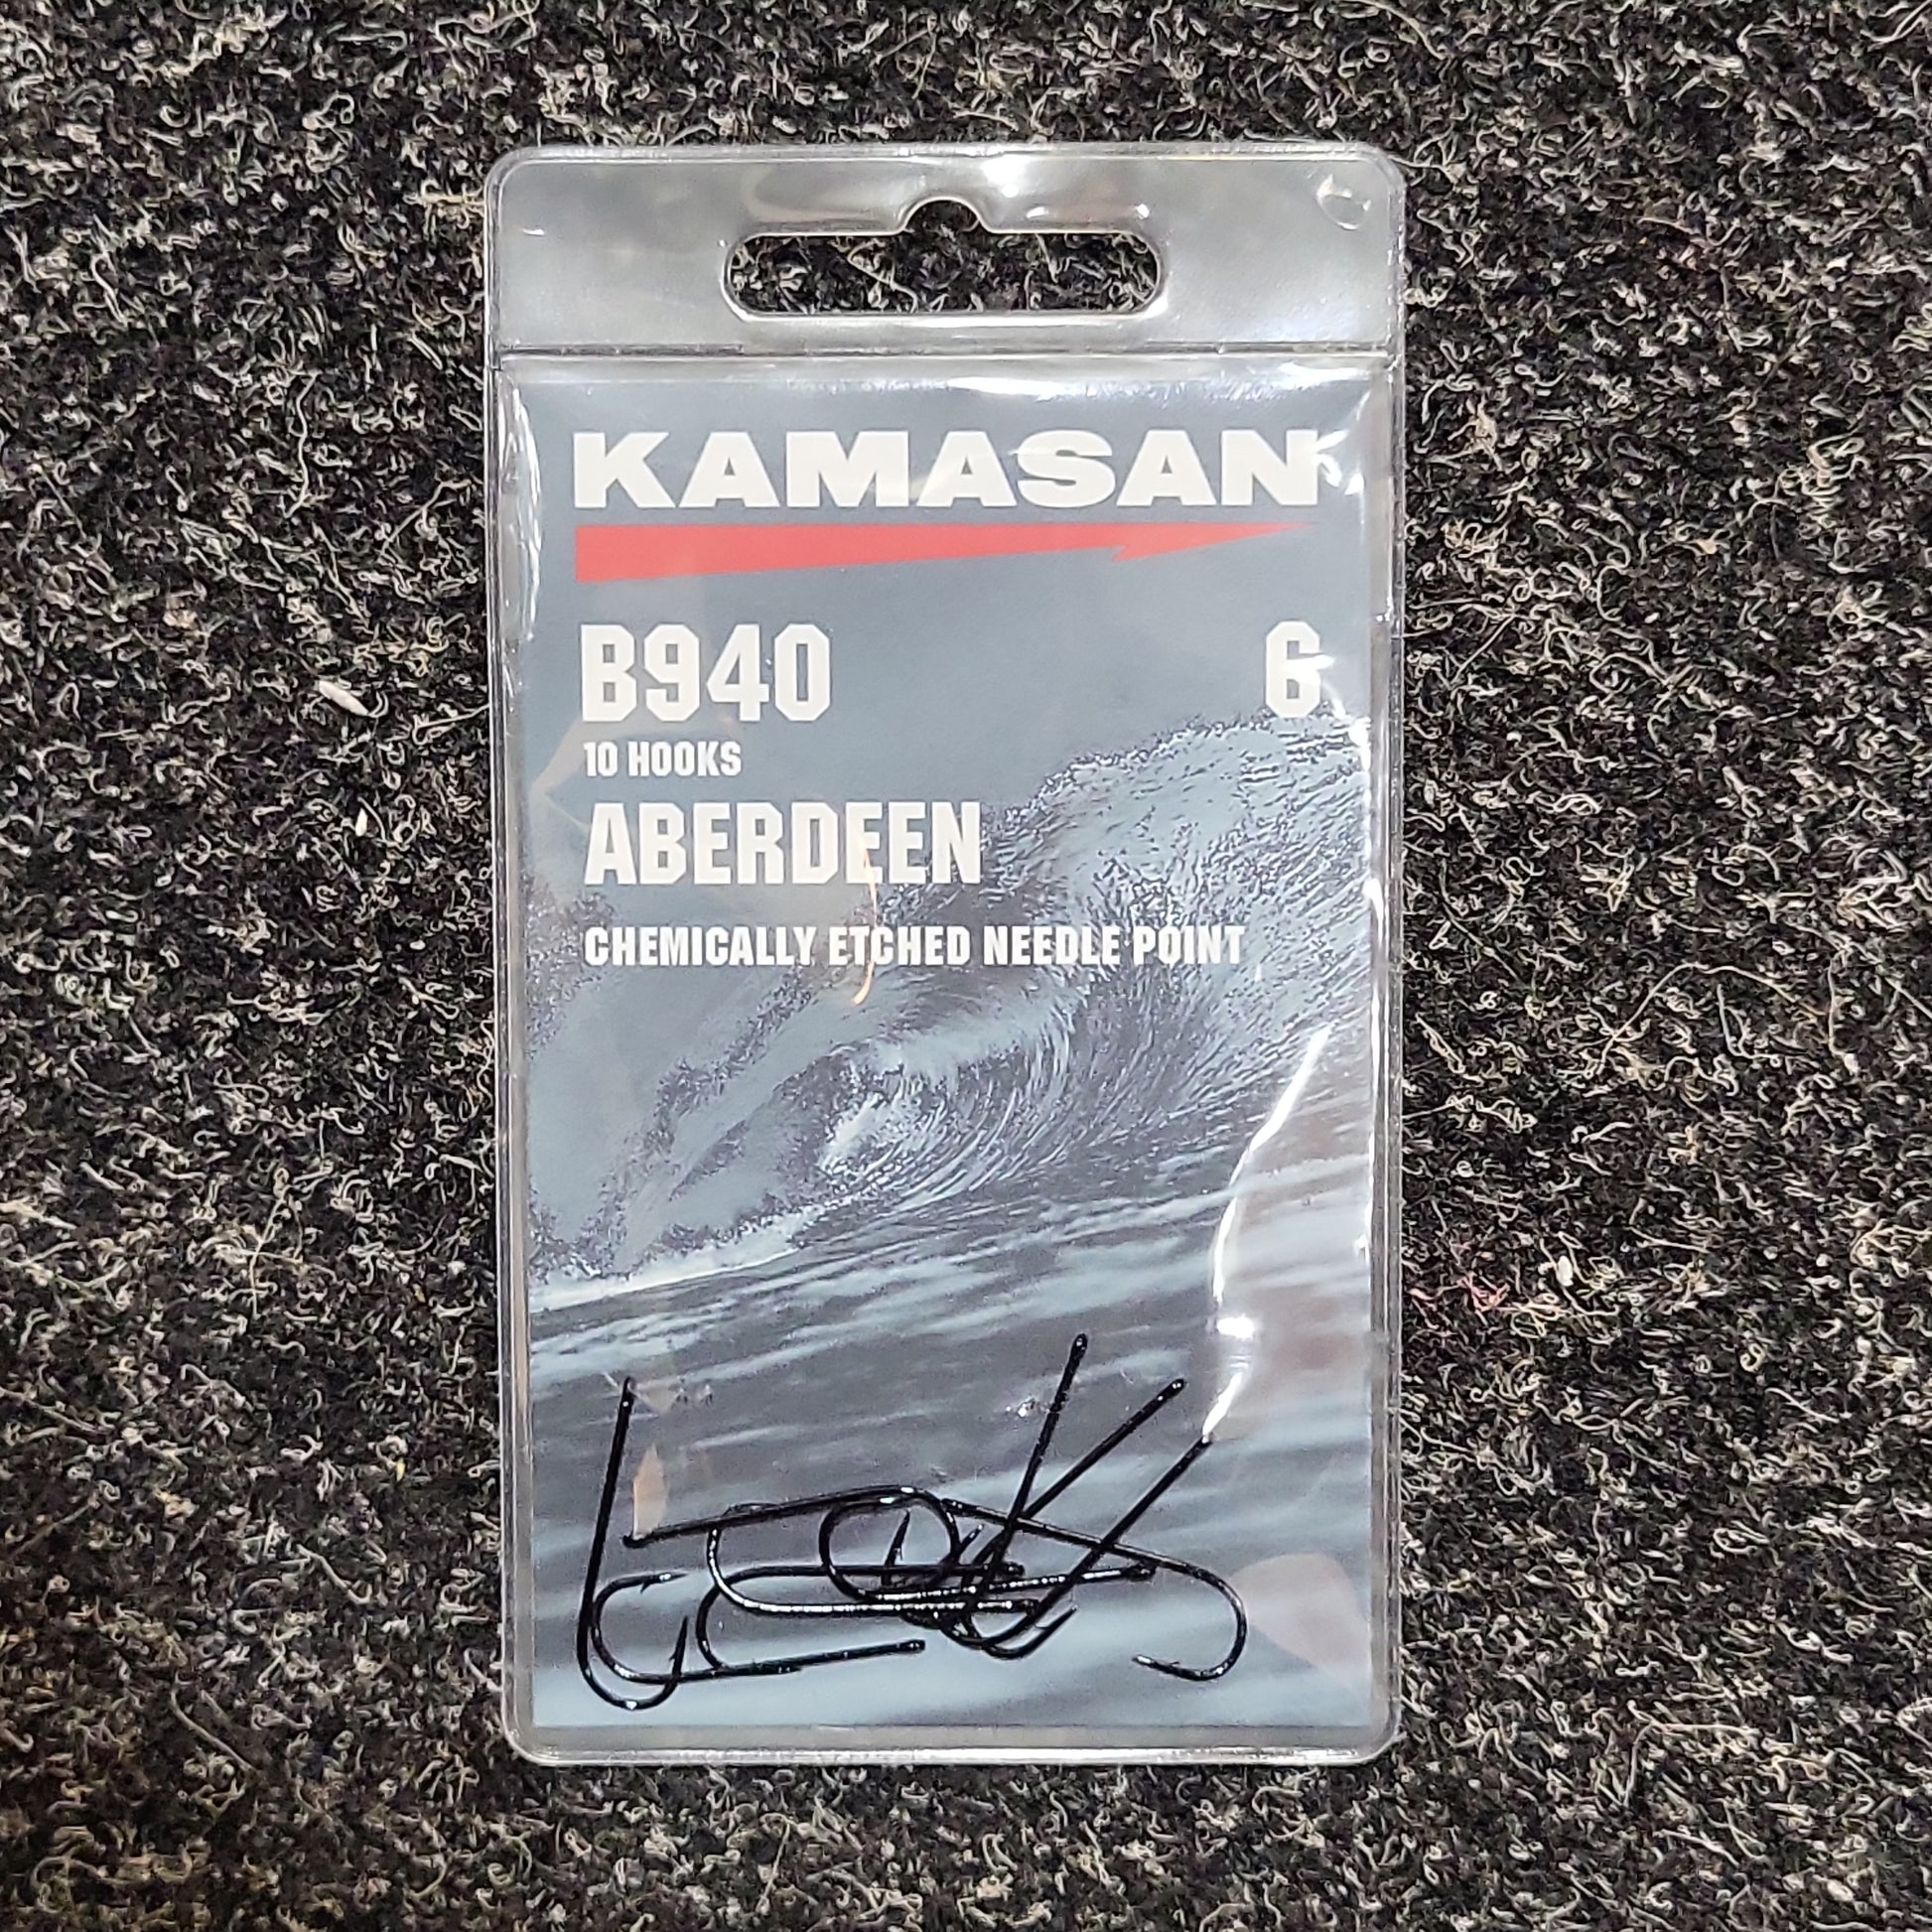 Kamasan B940 Aberdeen Hooks